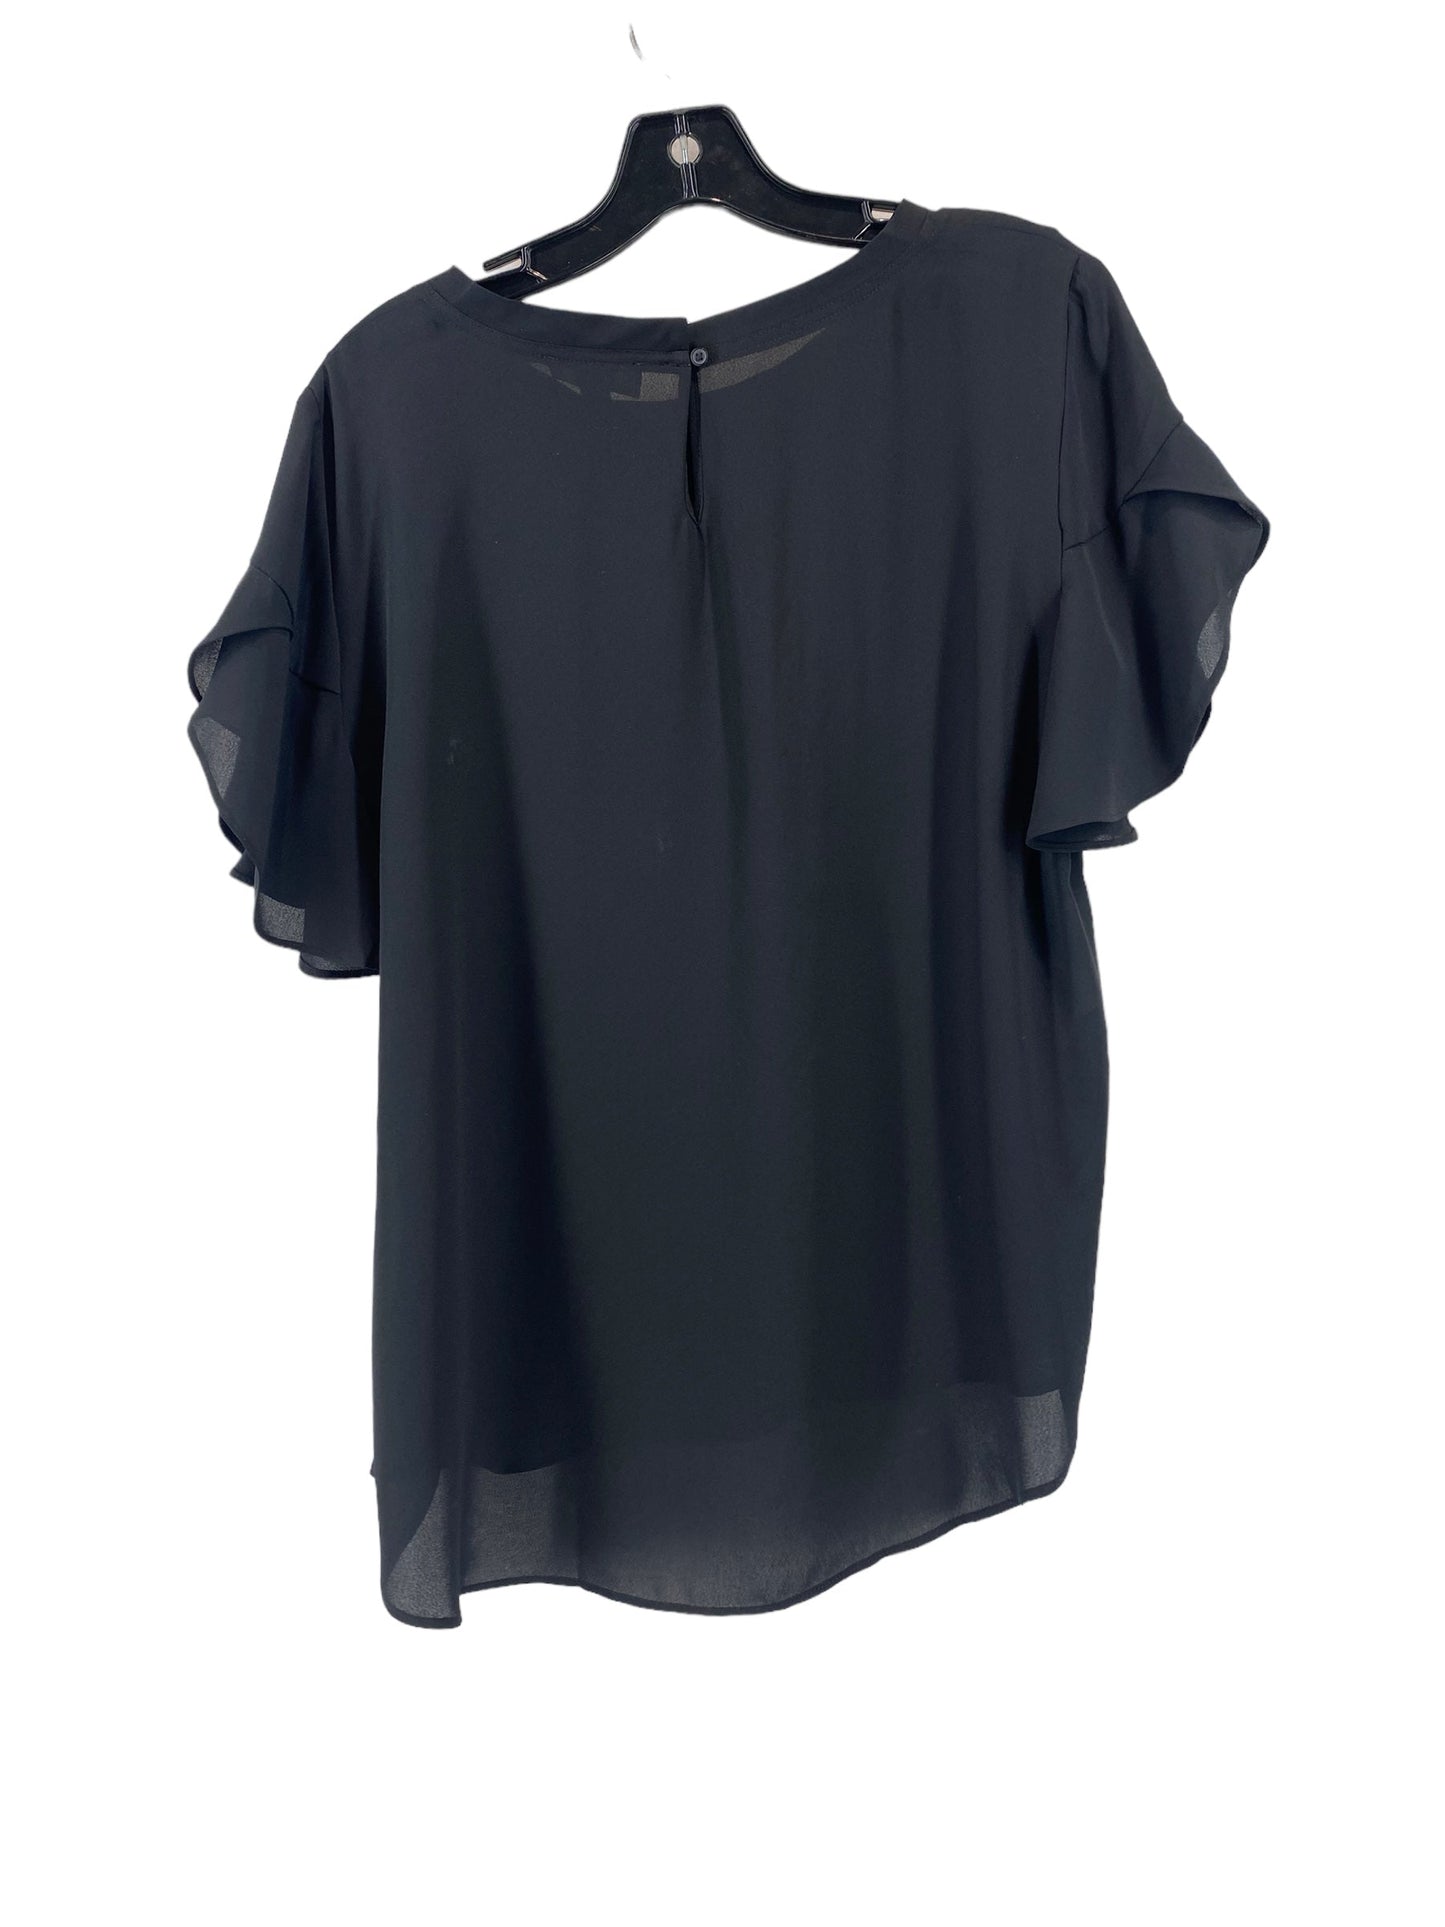 Blouse Short Sleeve By Loft  Size: M